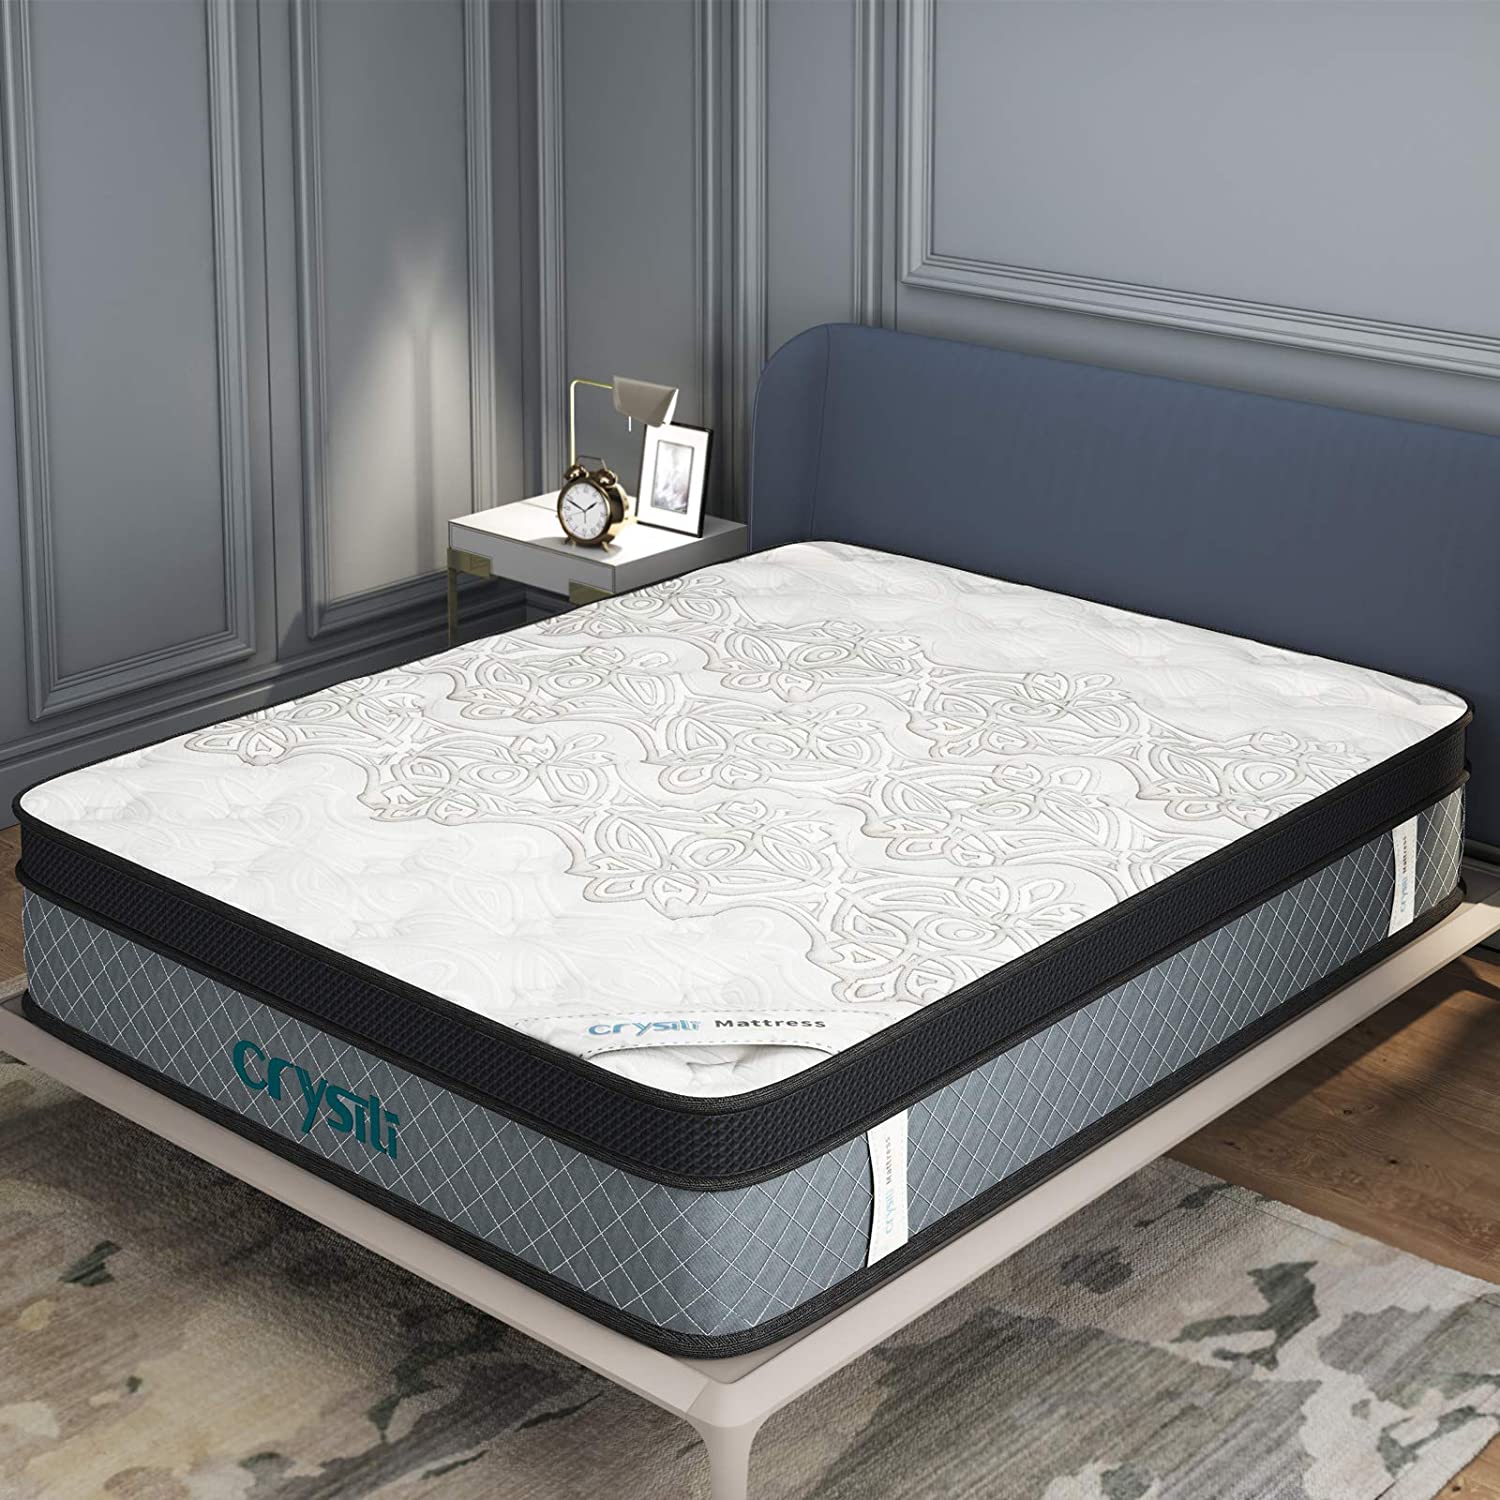 Crystli 12 inch Memory Foam Mattress in Box Breathable Bed Mattress